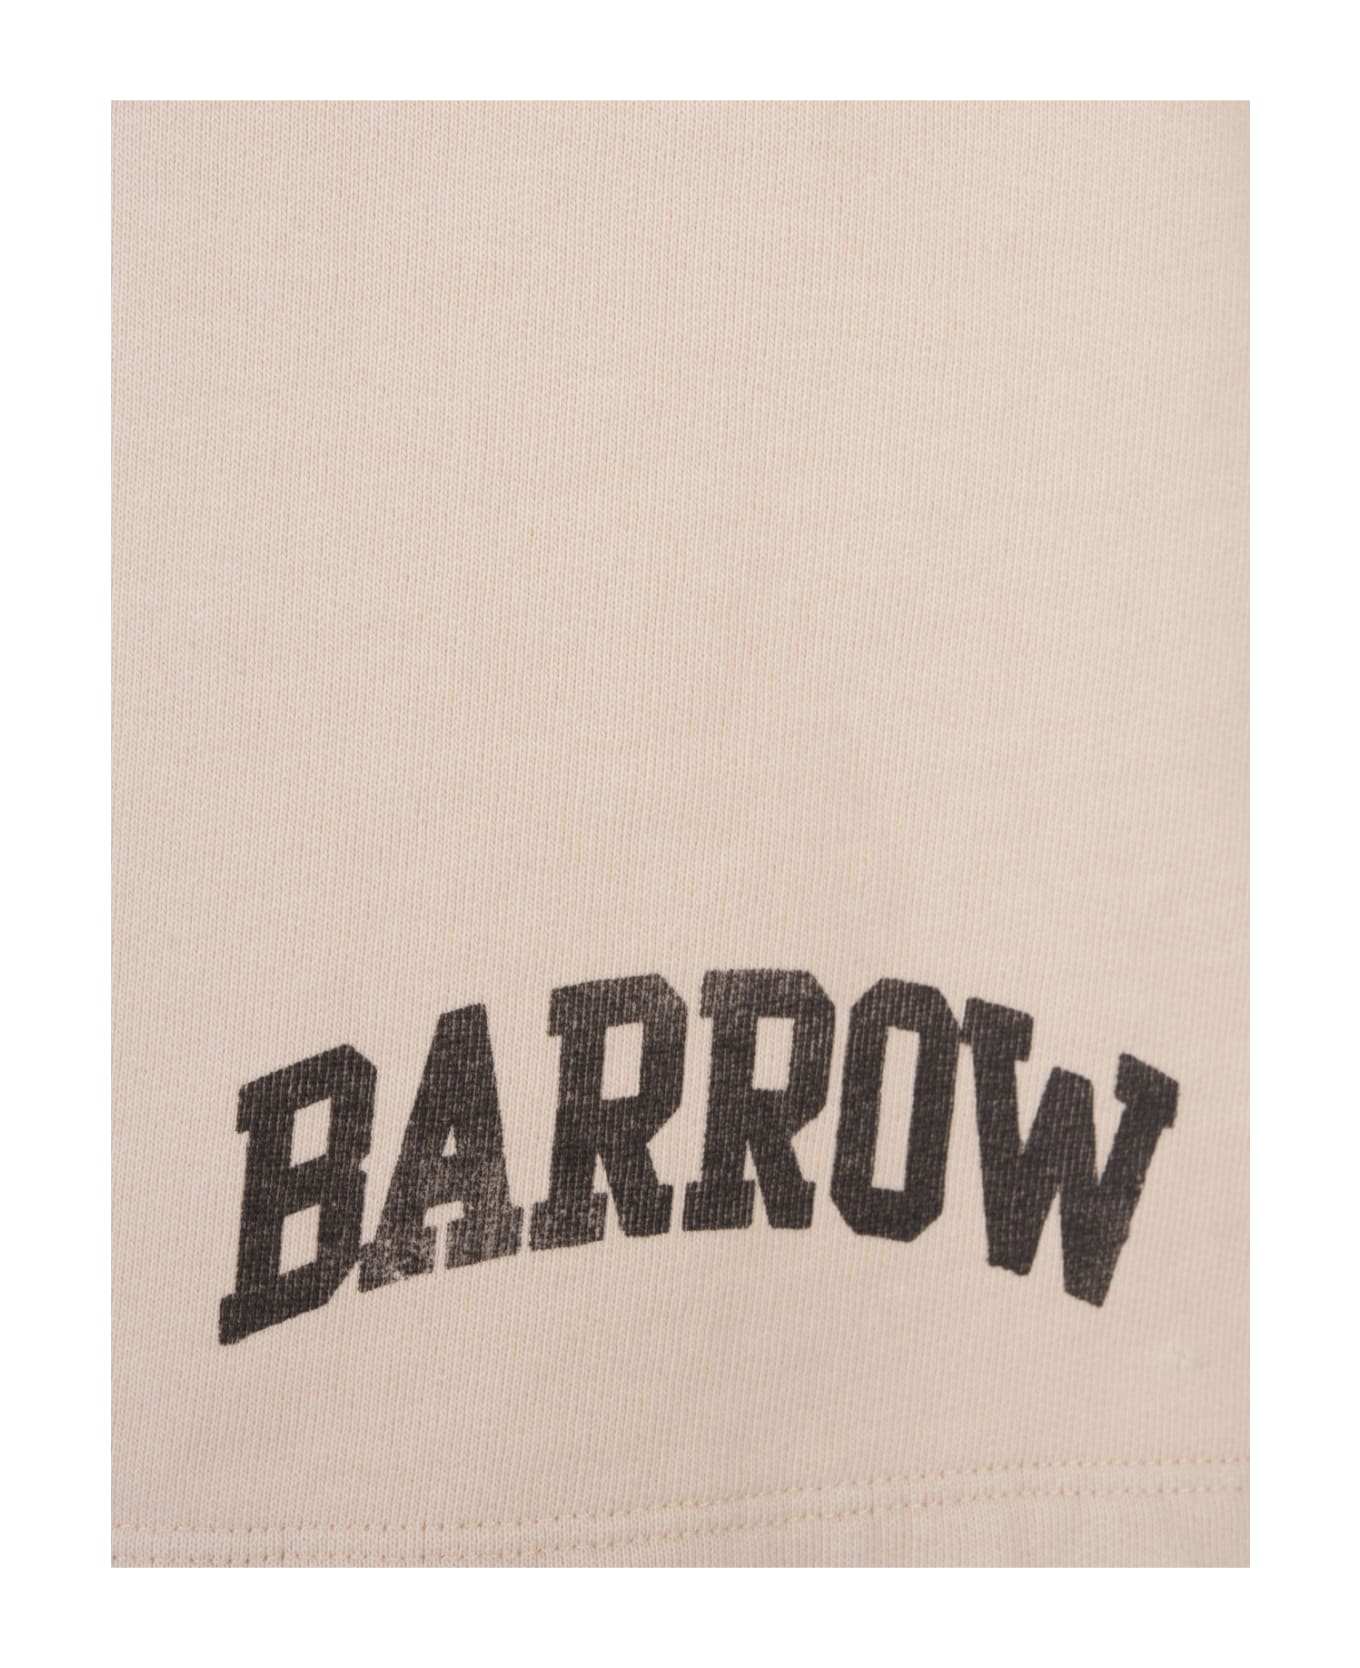 Barrow Tortora Sports Bermuda Shorts With Logo - Brown